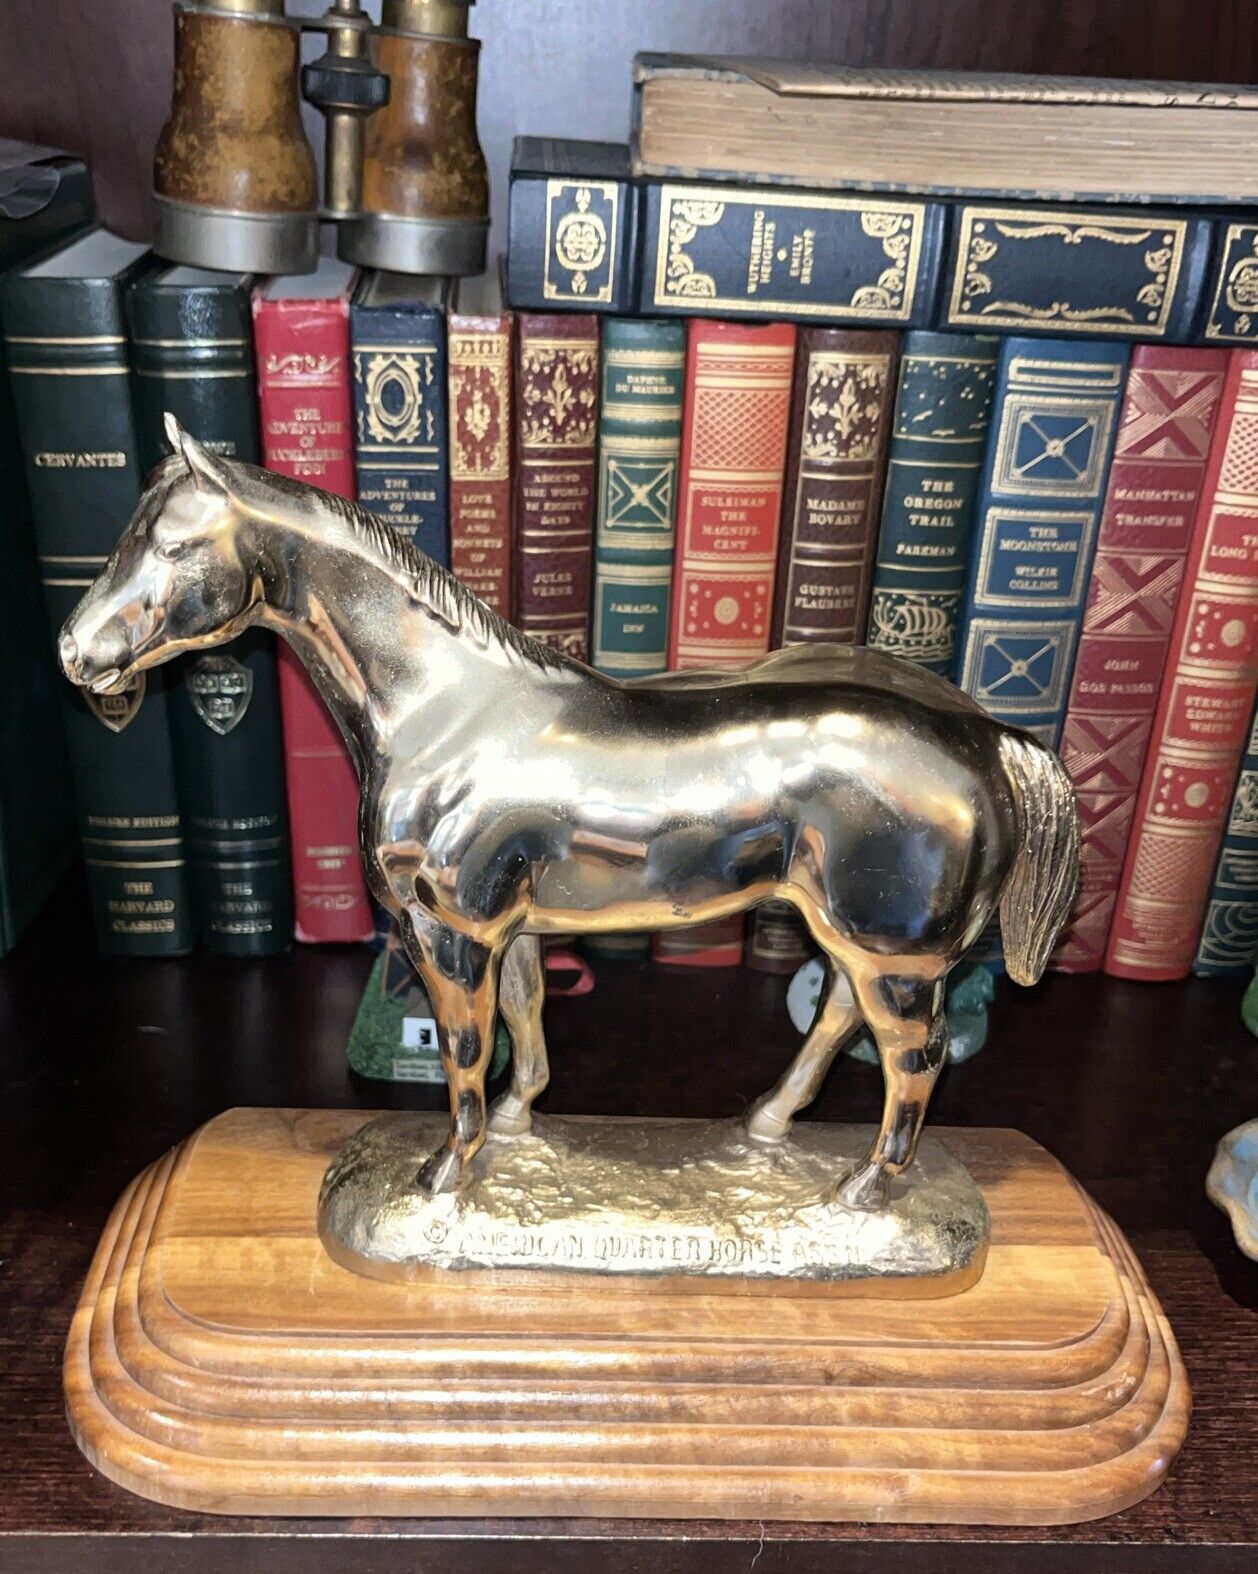 Vintage Solid Brass 5lb Statue Trophy American Quarter Horse Association